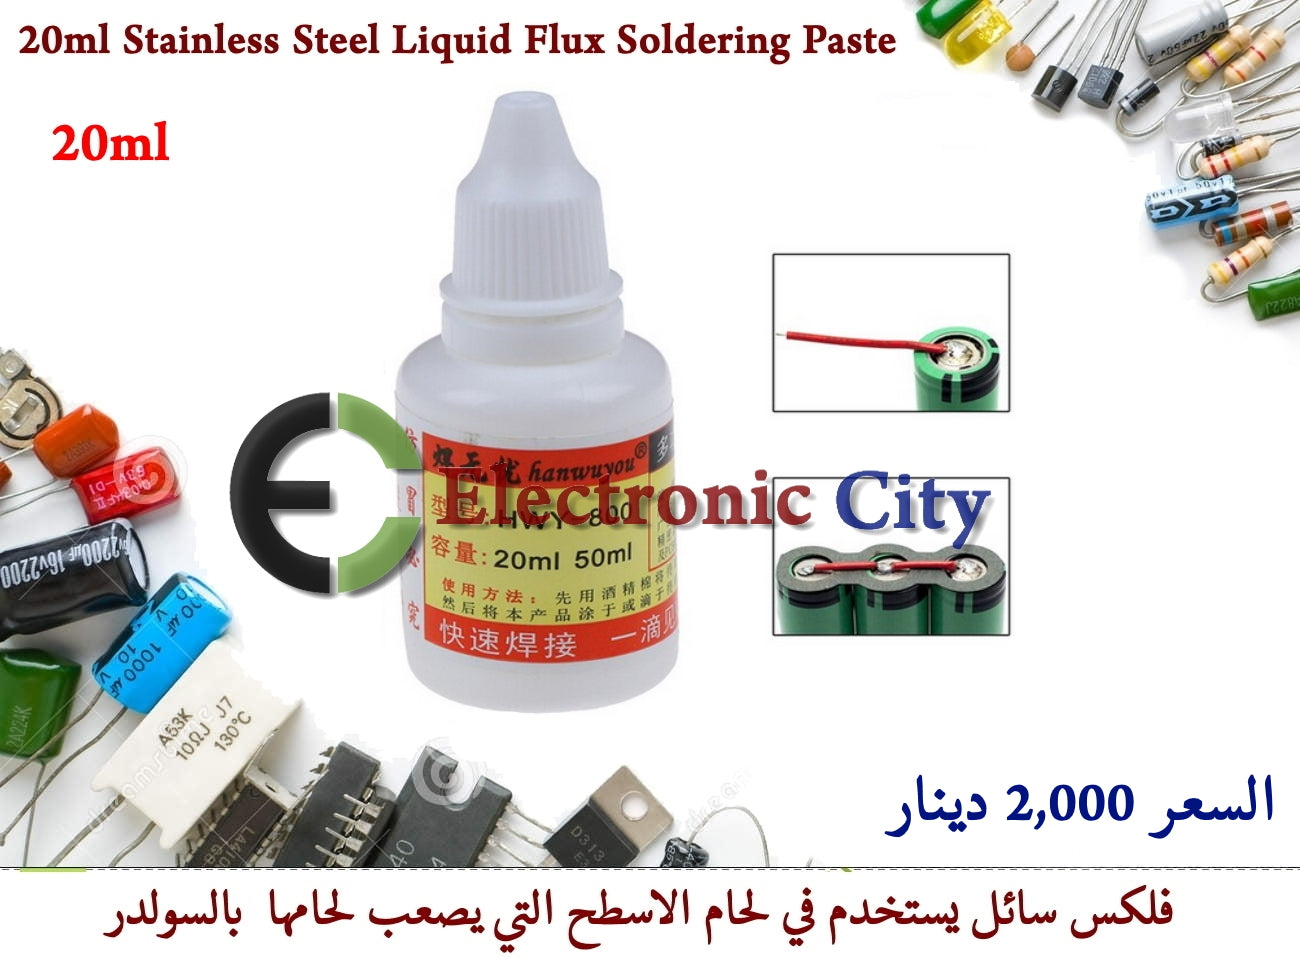 20ml Stainless Steel Liquid Flux Soldering Paste